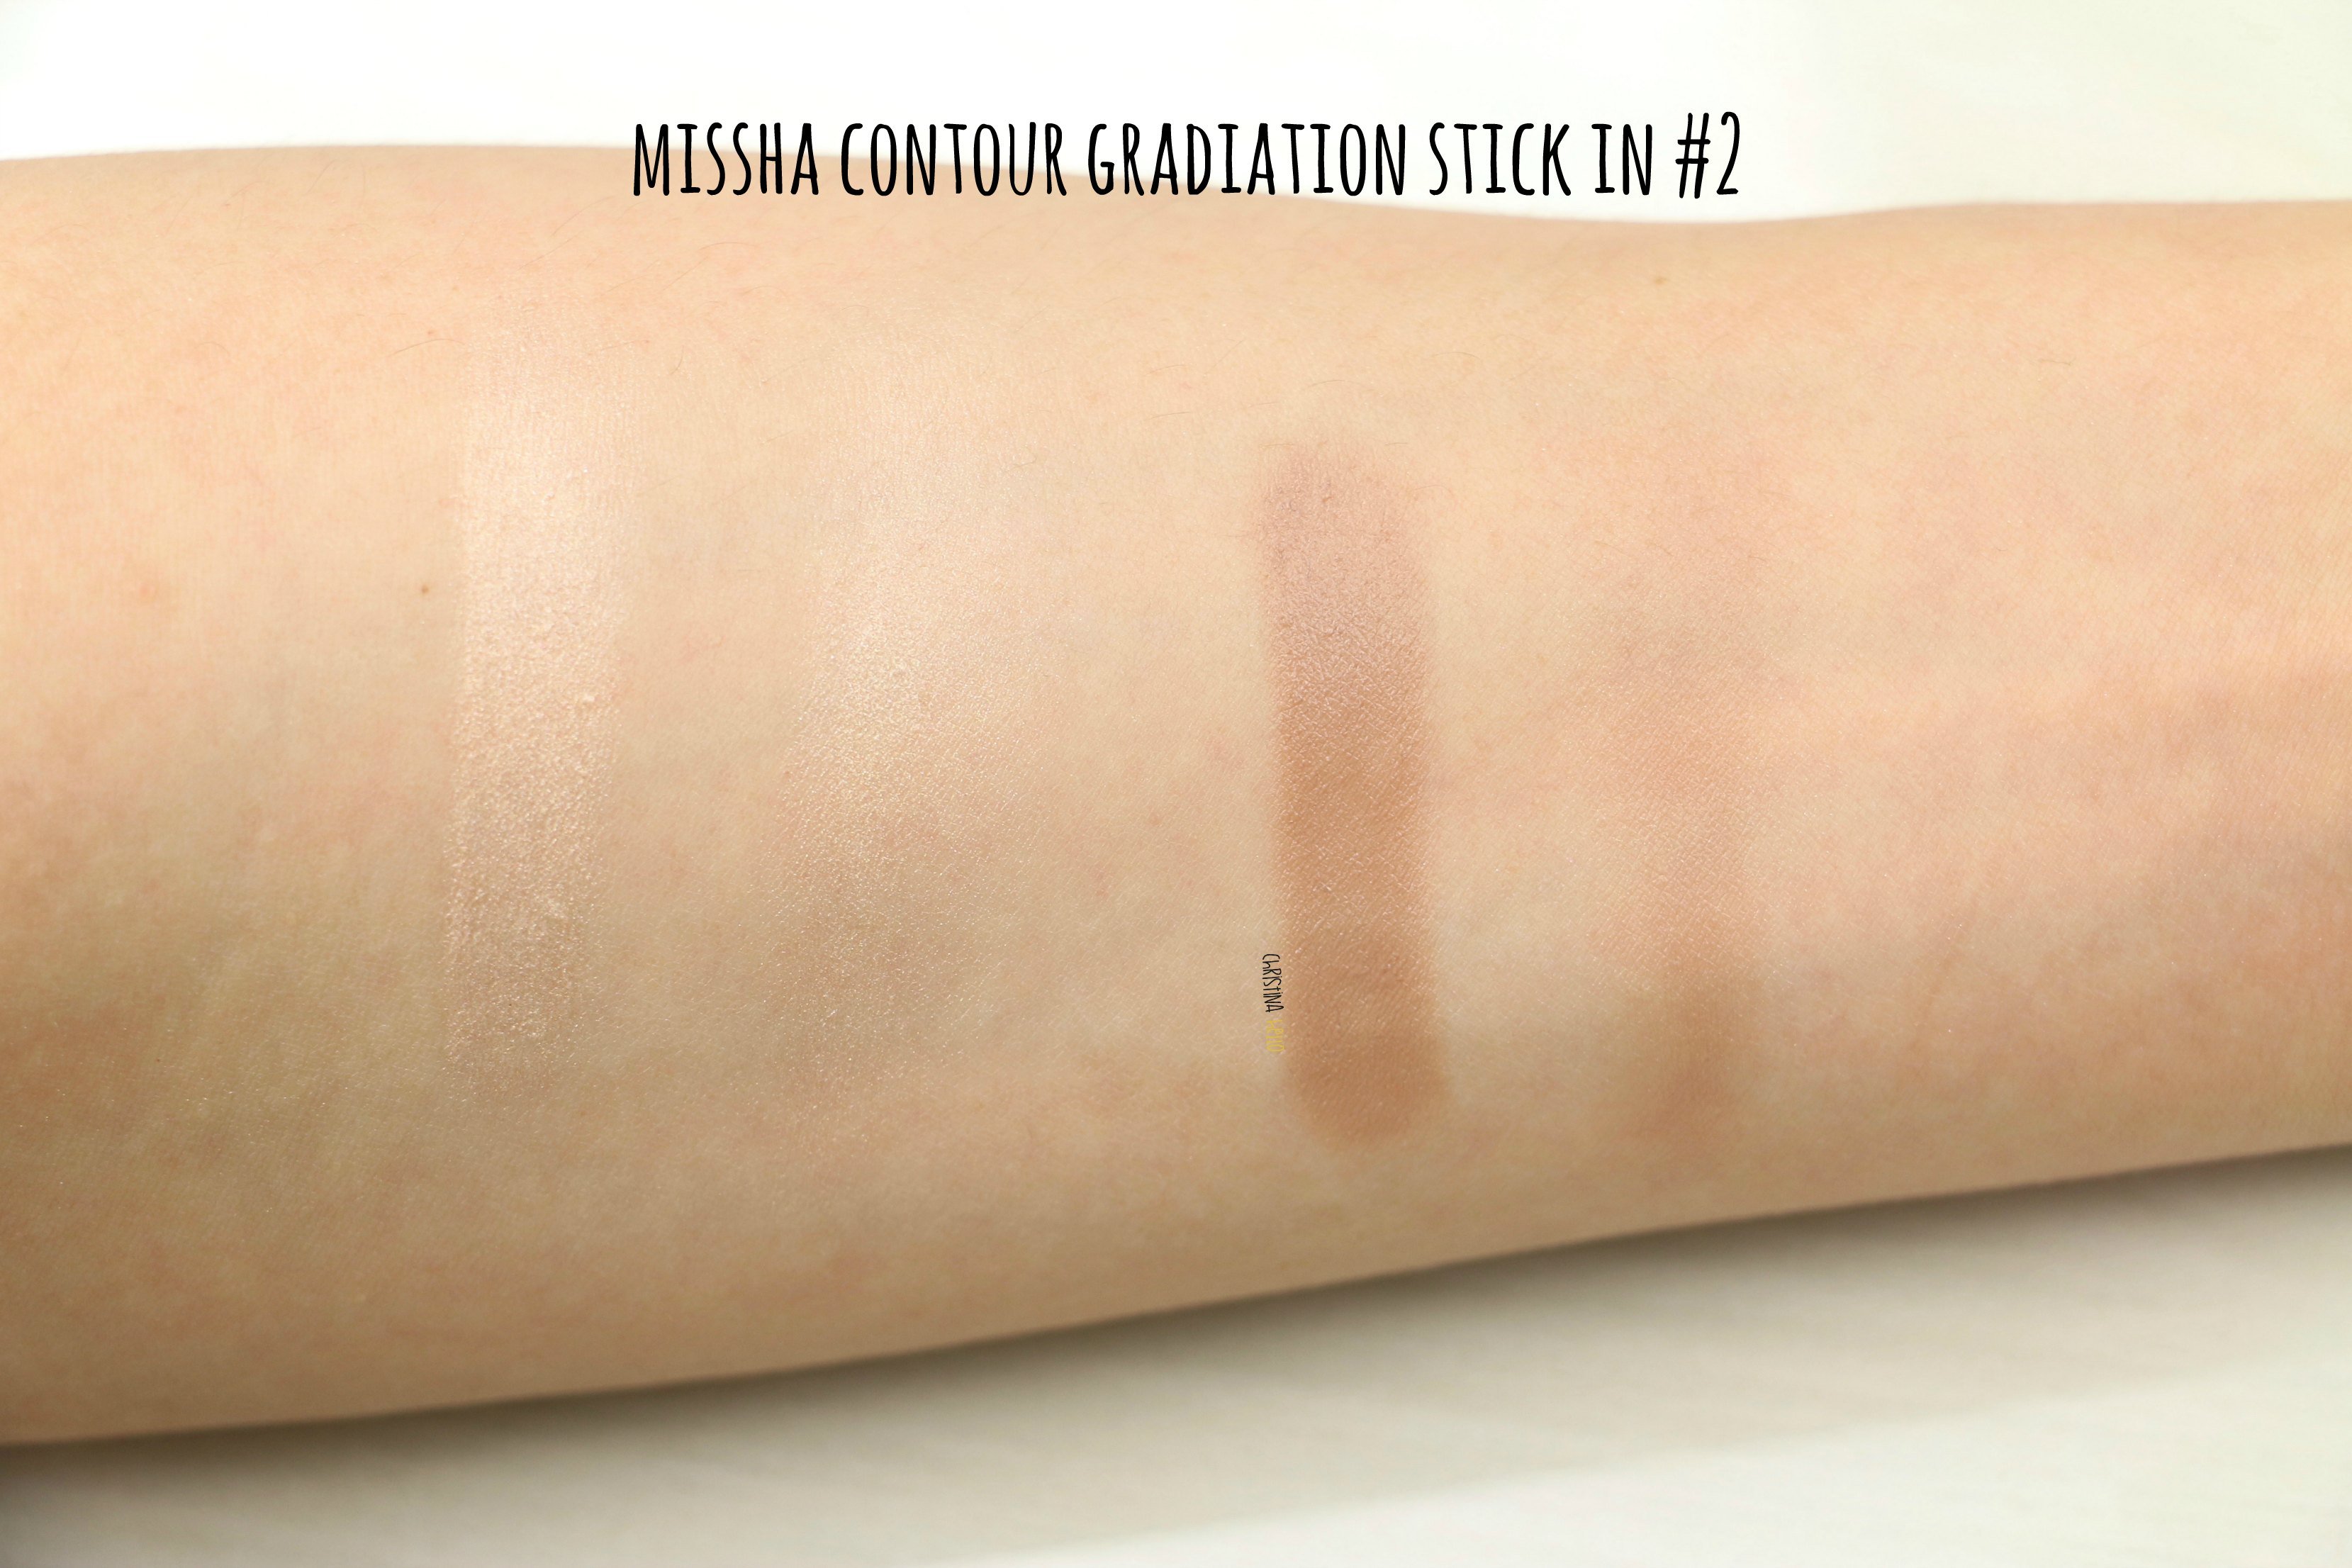 MIssha contour gradiation stick swatches